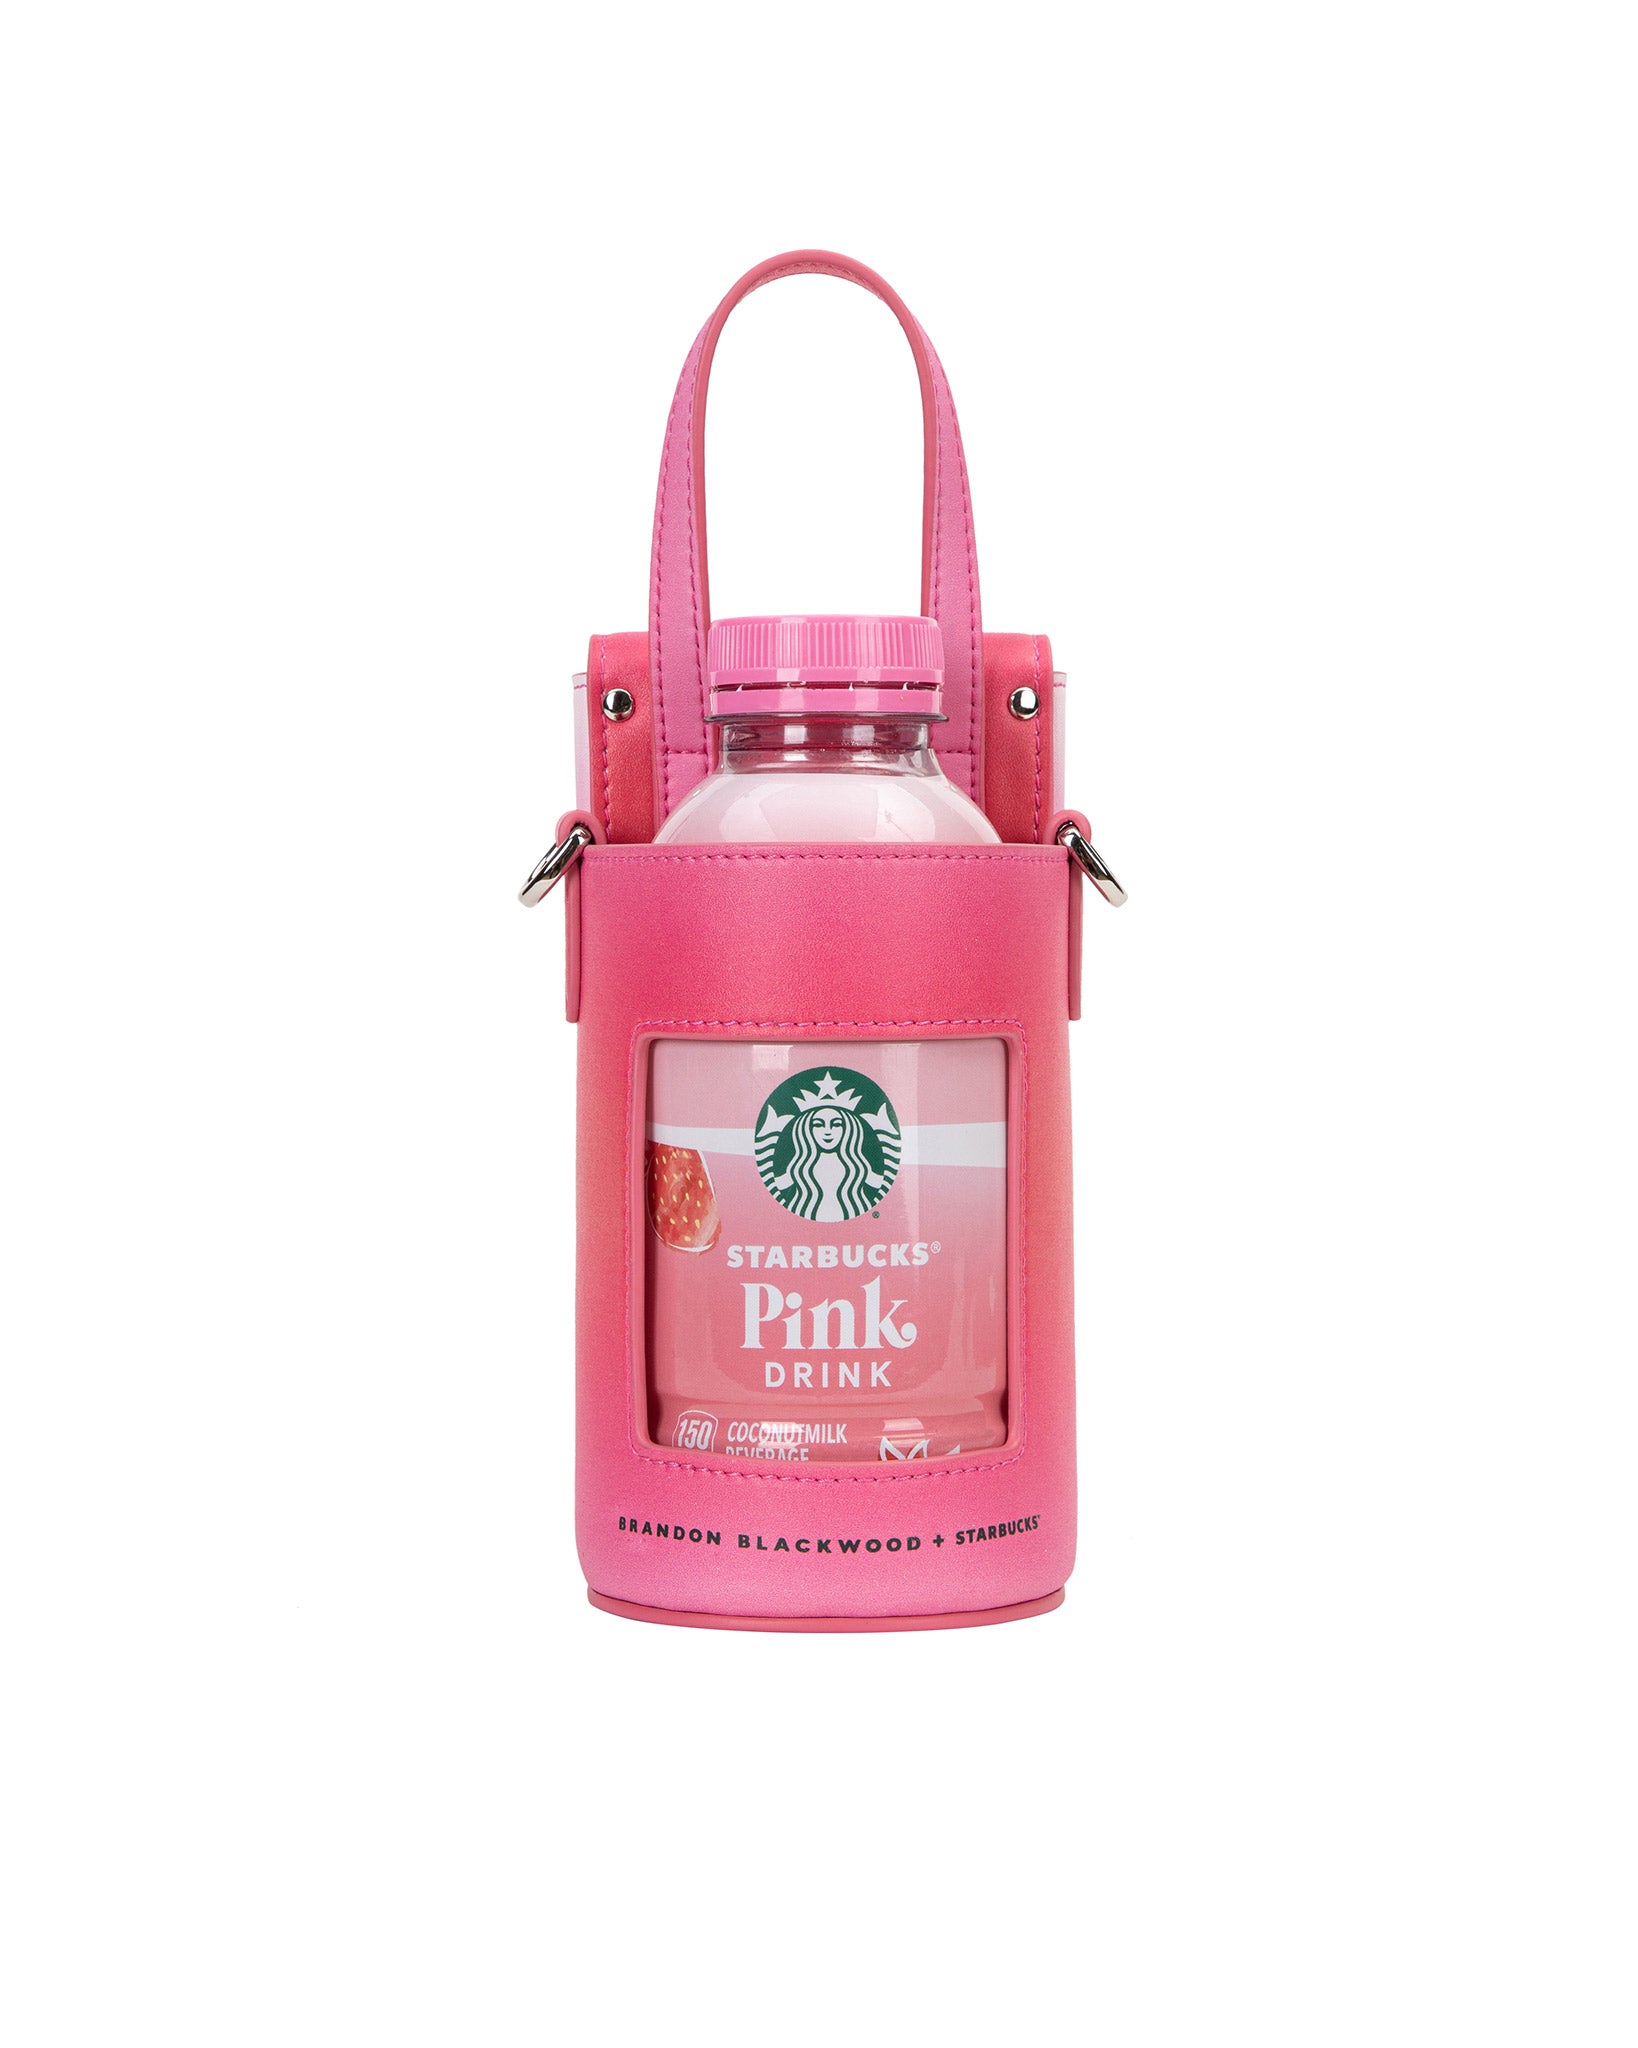 Starbucks x Brandon Blackwood Drop Pink Drink Bags